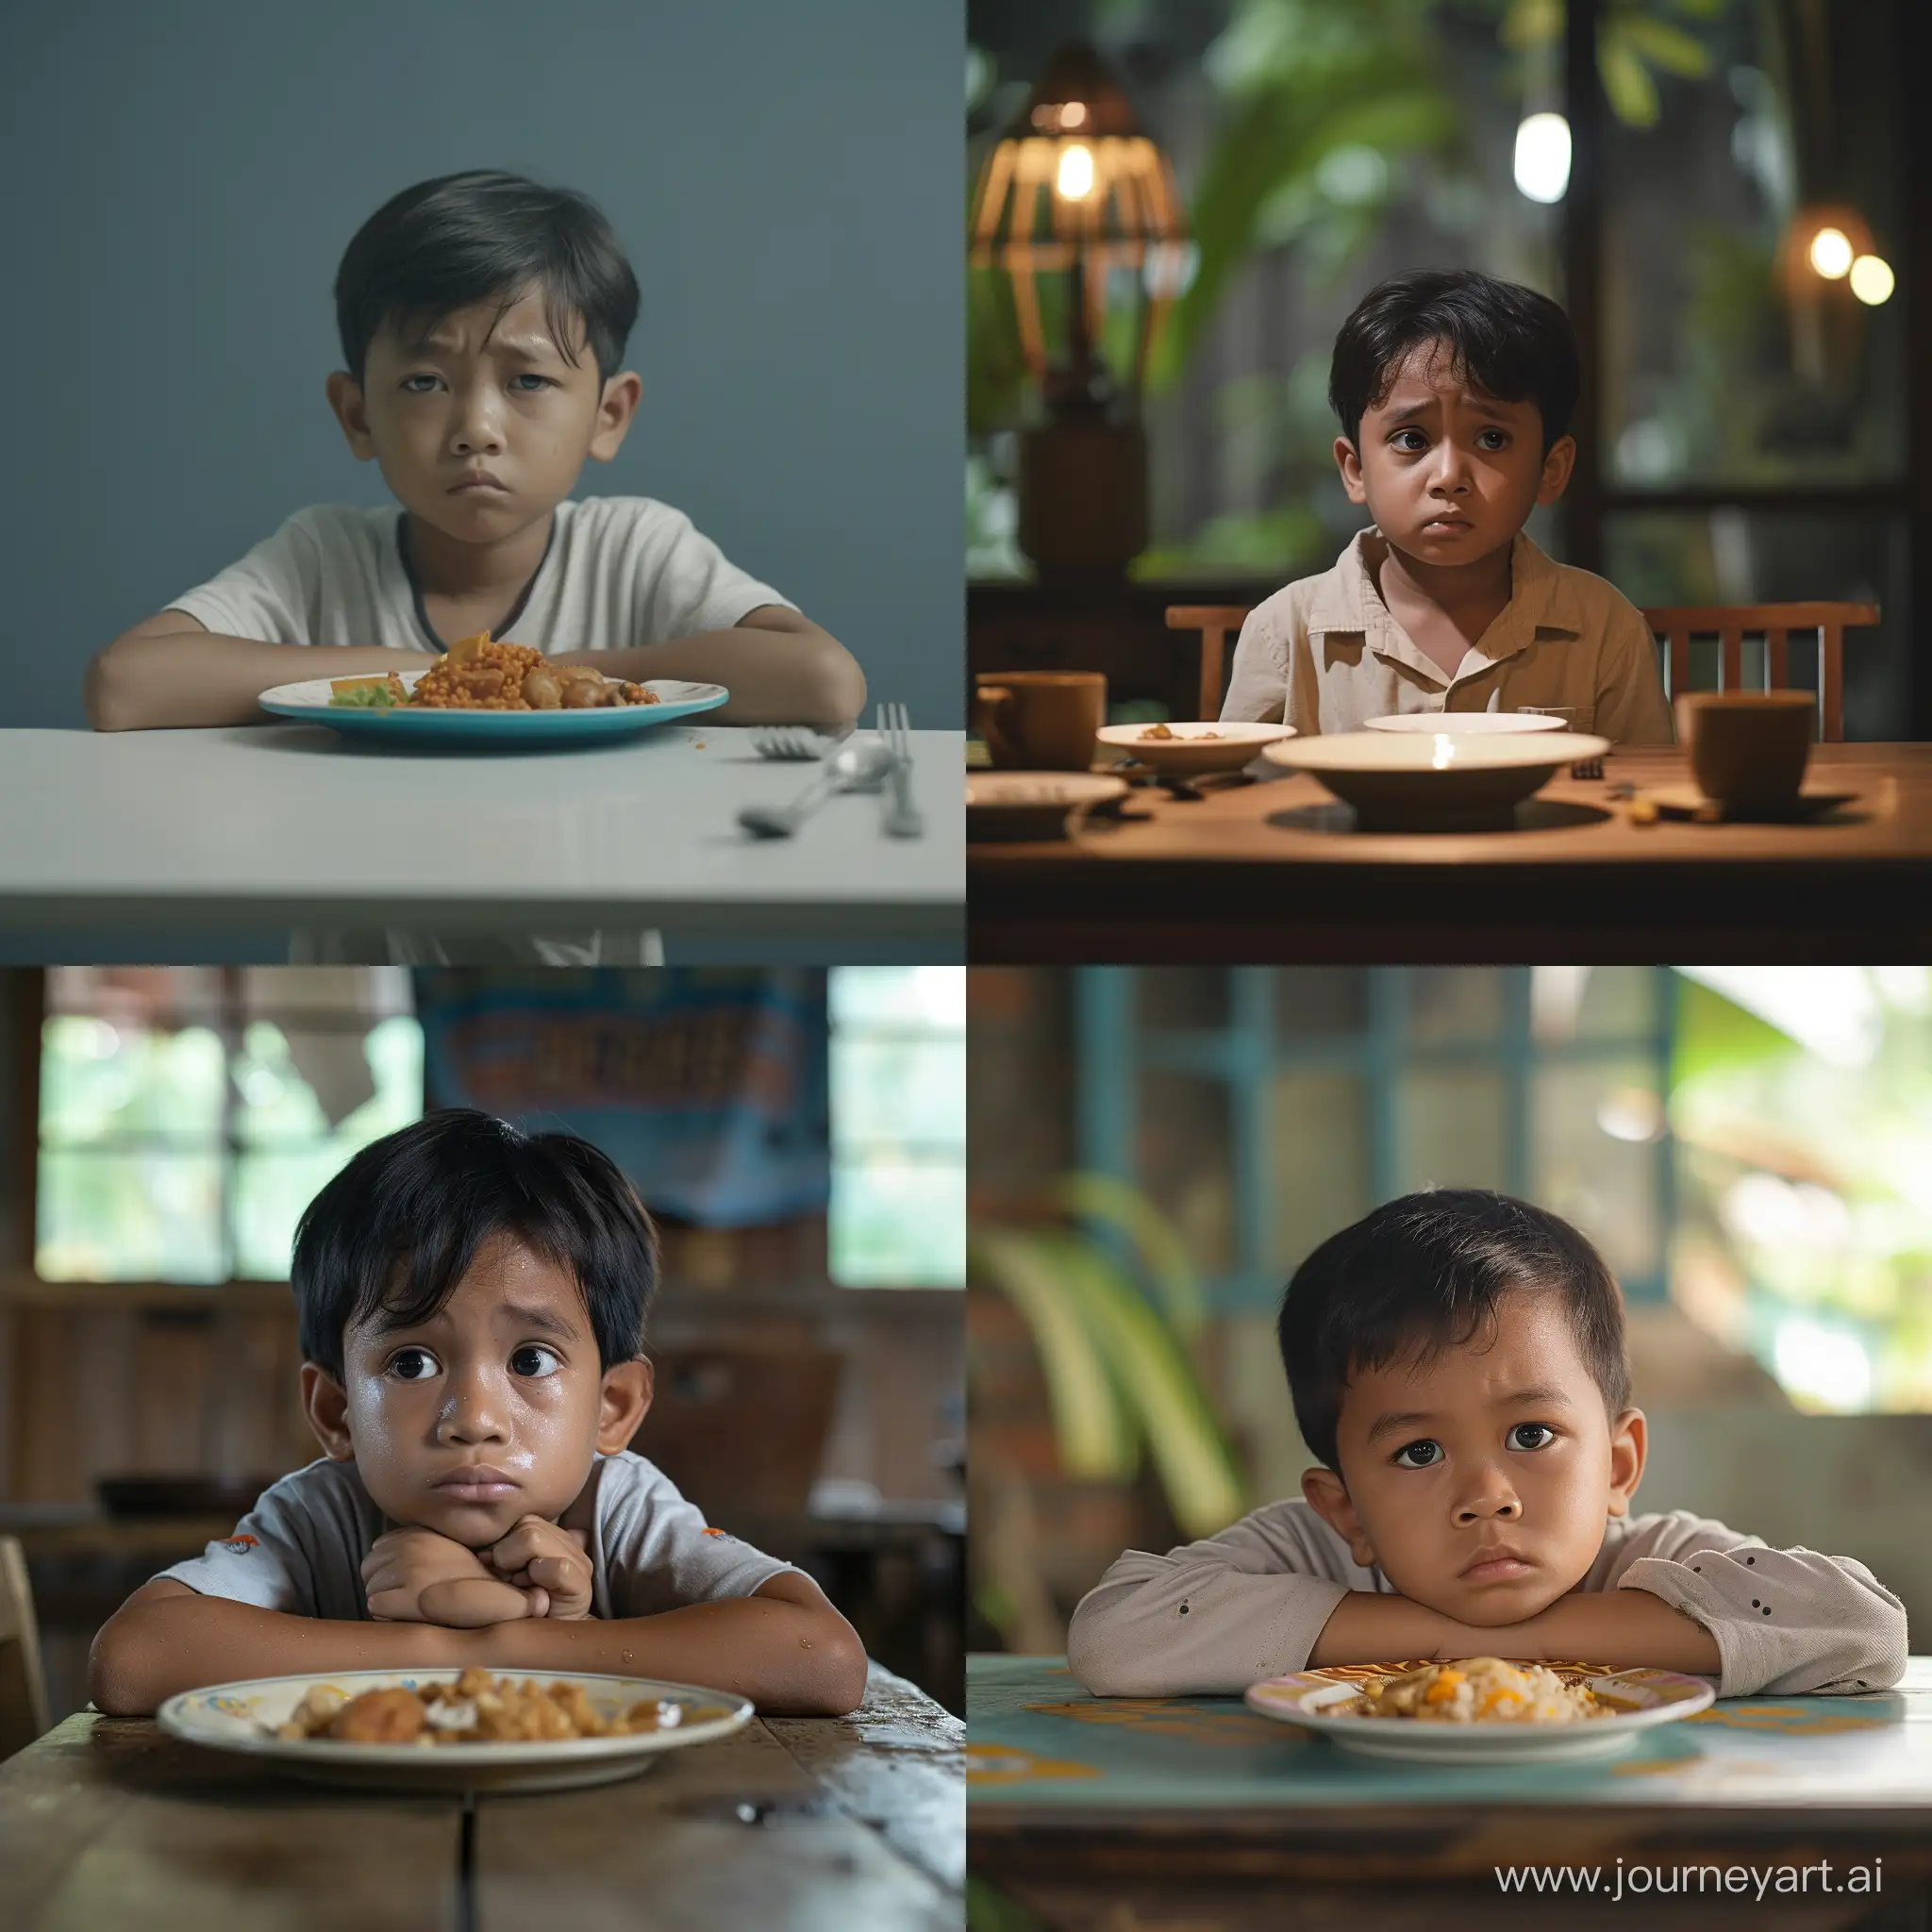 Upset-Indonesian-Boy-at-Dining-Table-Emotional-Scene